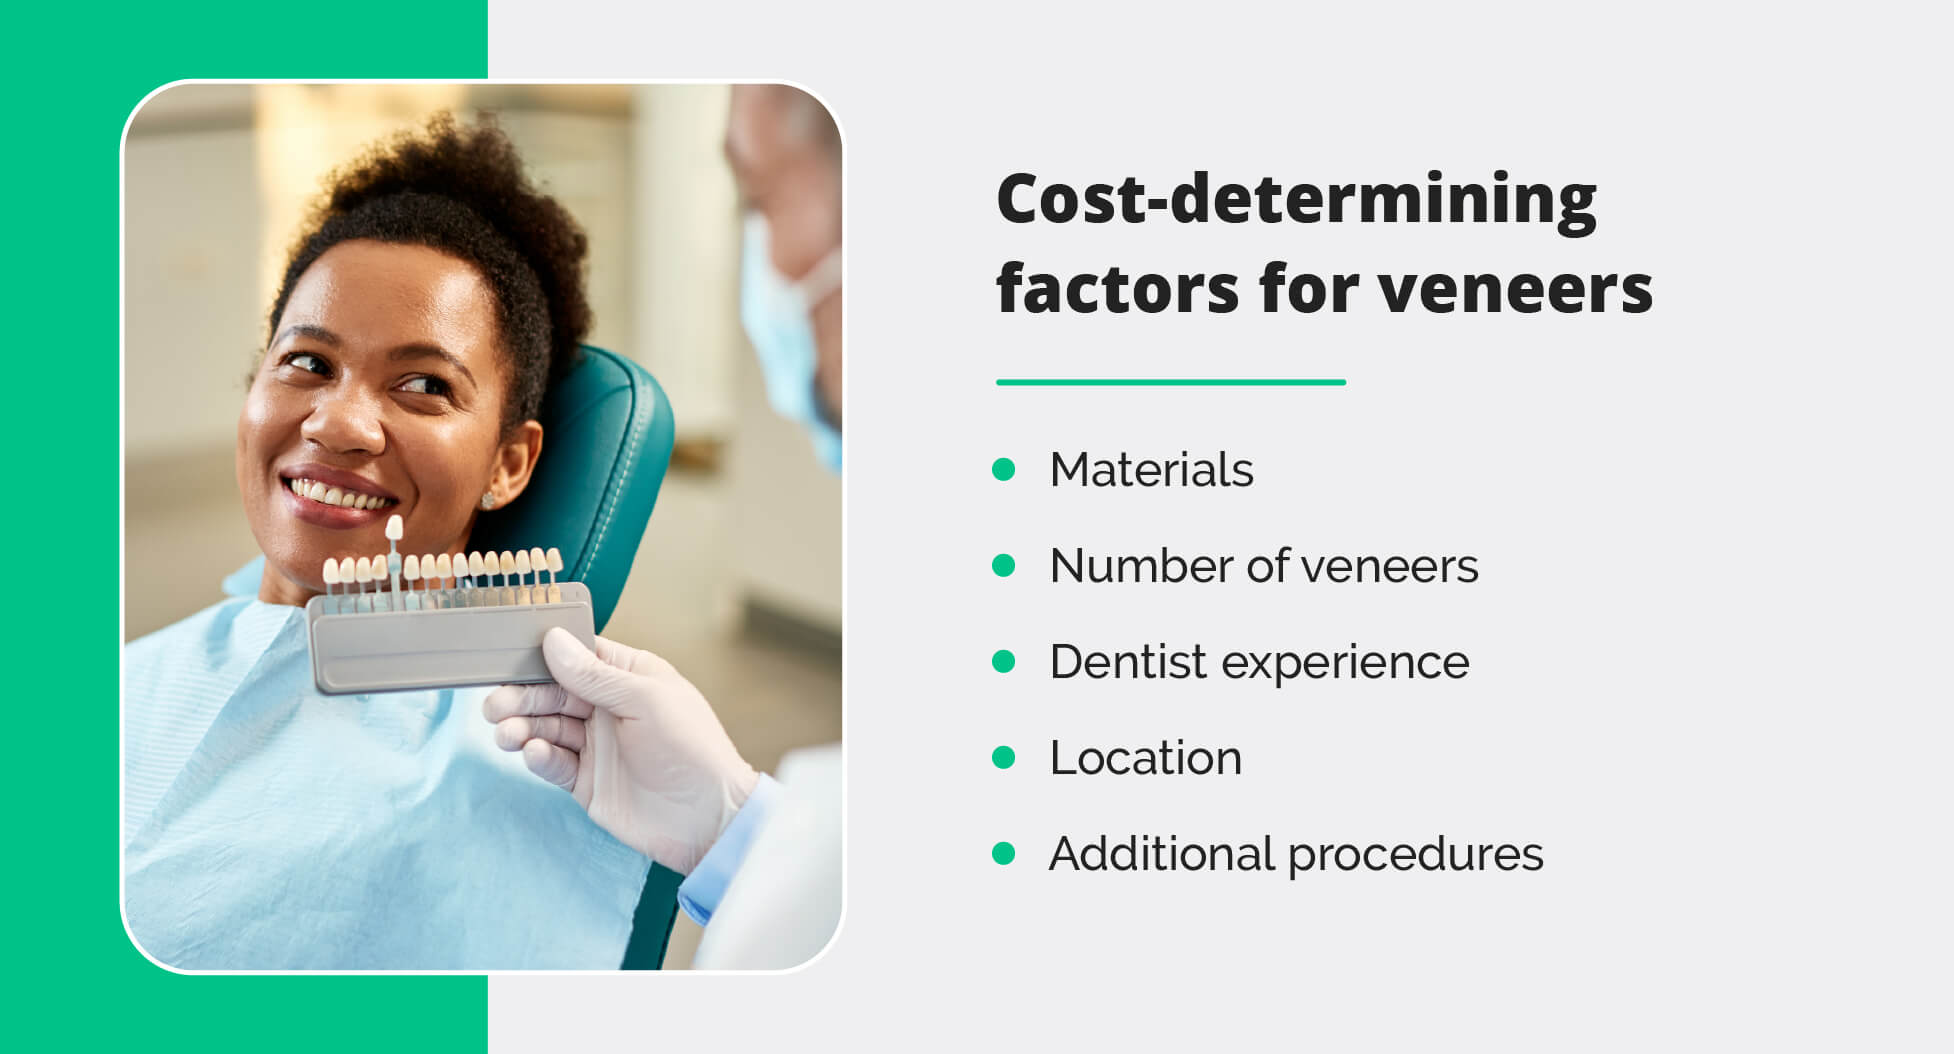 Illustration: Cost-determining factors for veneers - Materials; Number of veneers; dentist experience; location; additional procedures